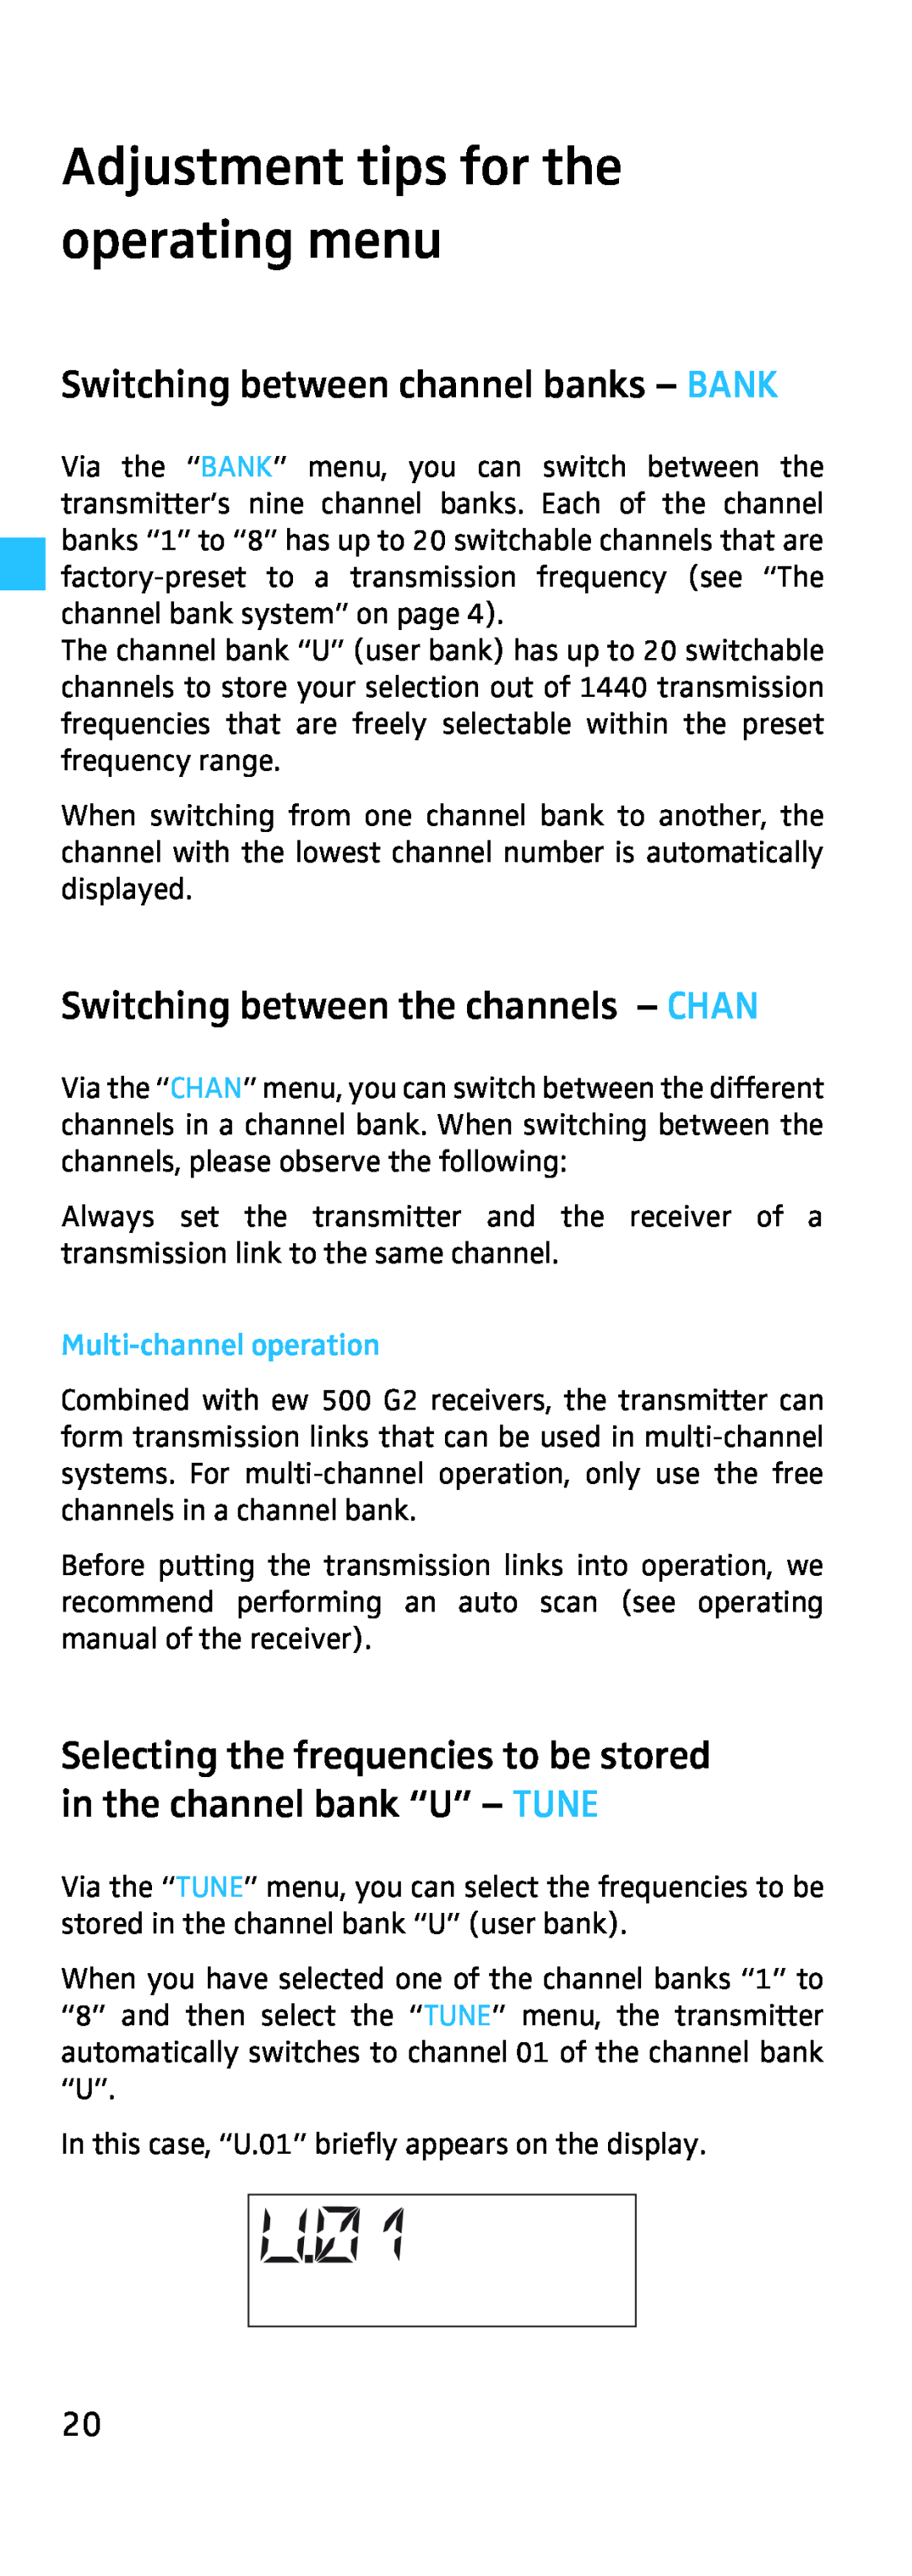 Sennheiser SK 500 Adjustment tips for the operating menu, Switching between channel banks - BANK, Multi-channeloperation 